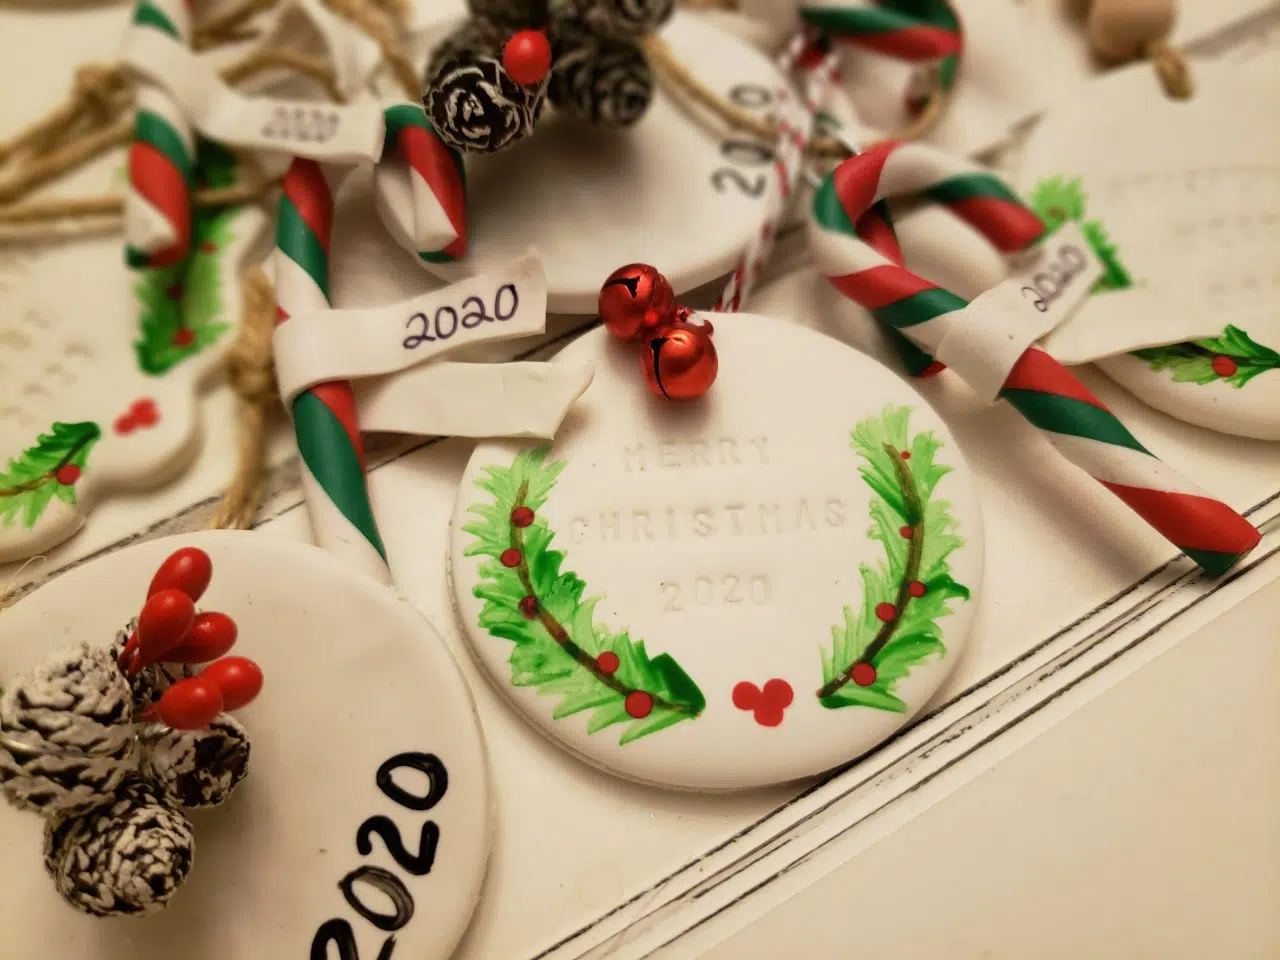 Clay Christmas Ornament Decorating Ideas | AllMomDoes